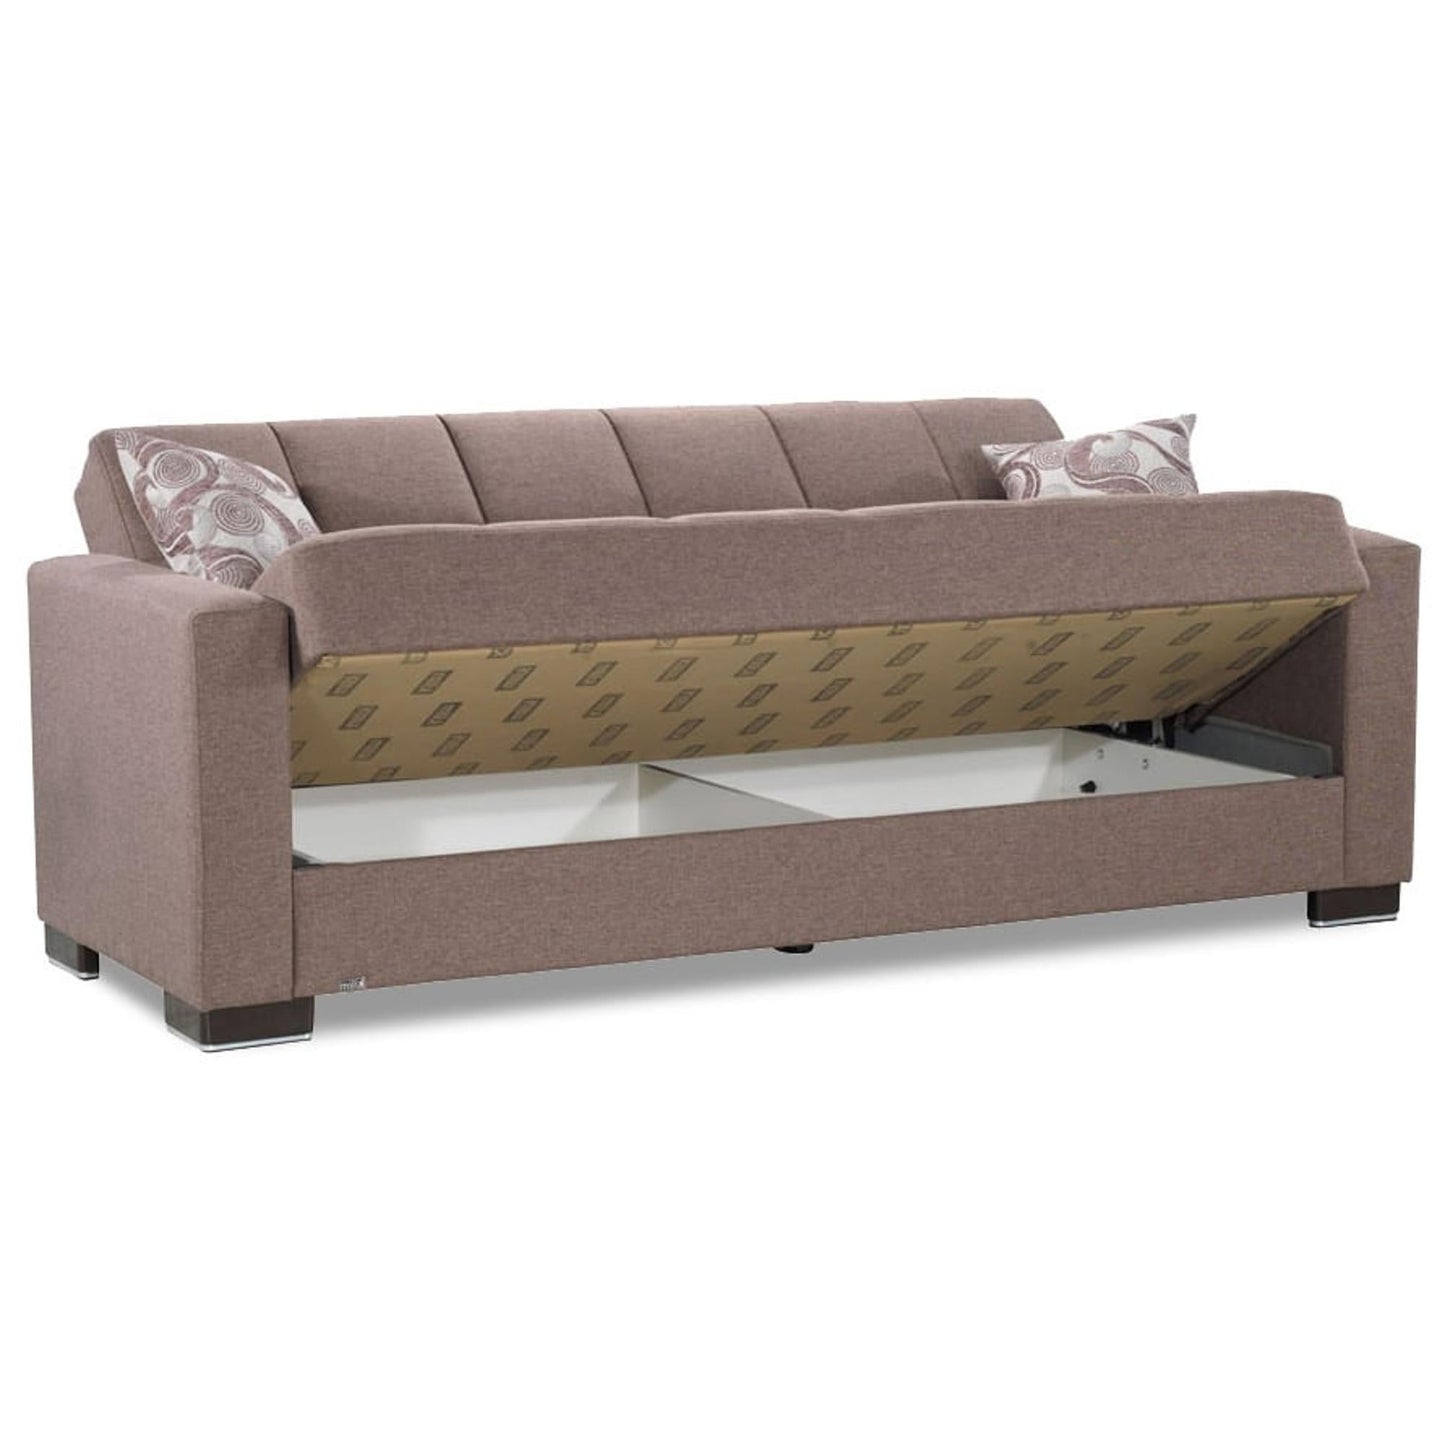 Armada Sofa Bed in Brown